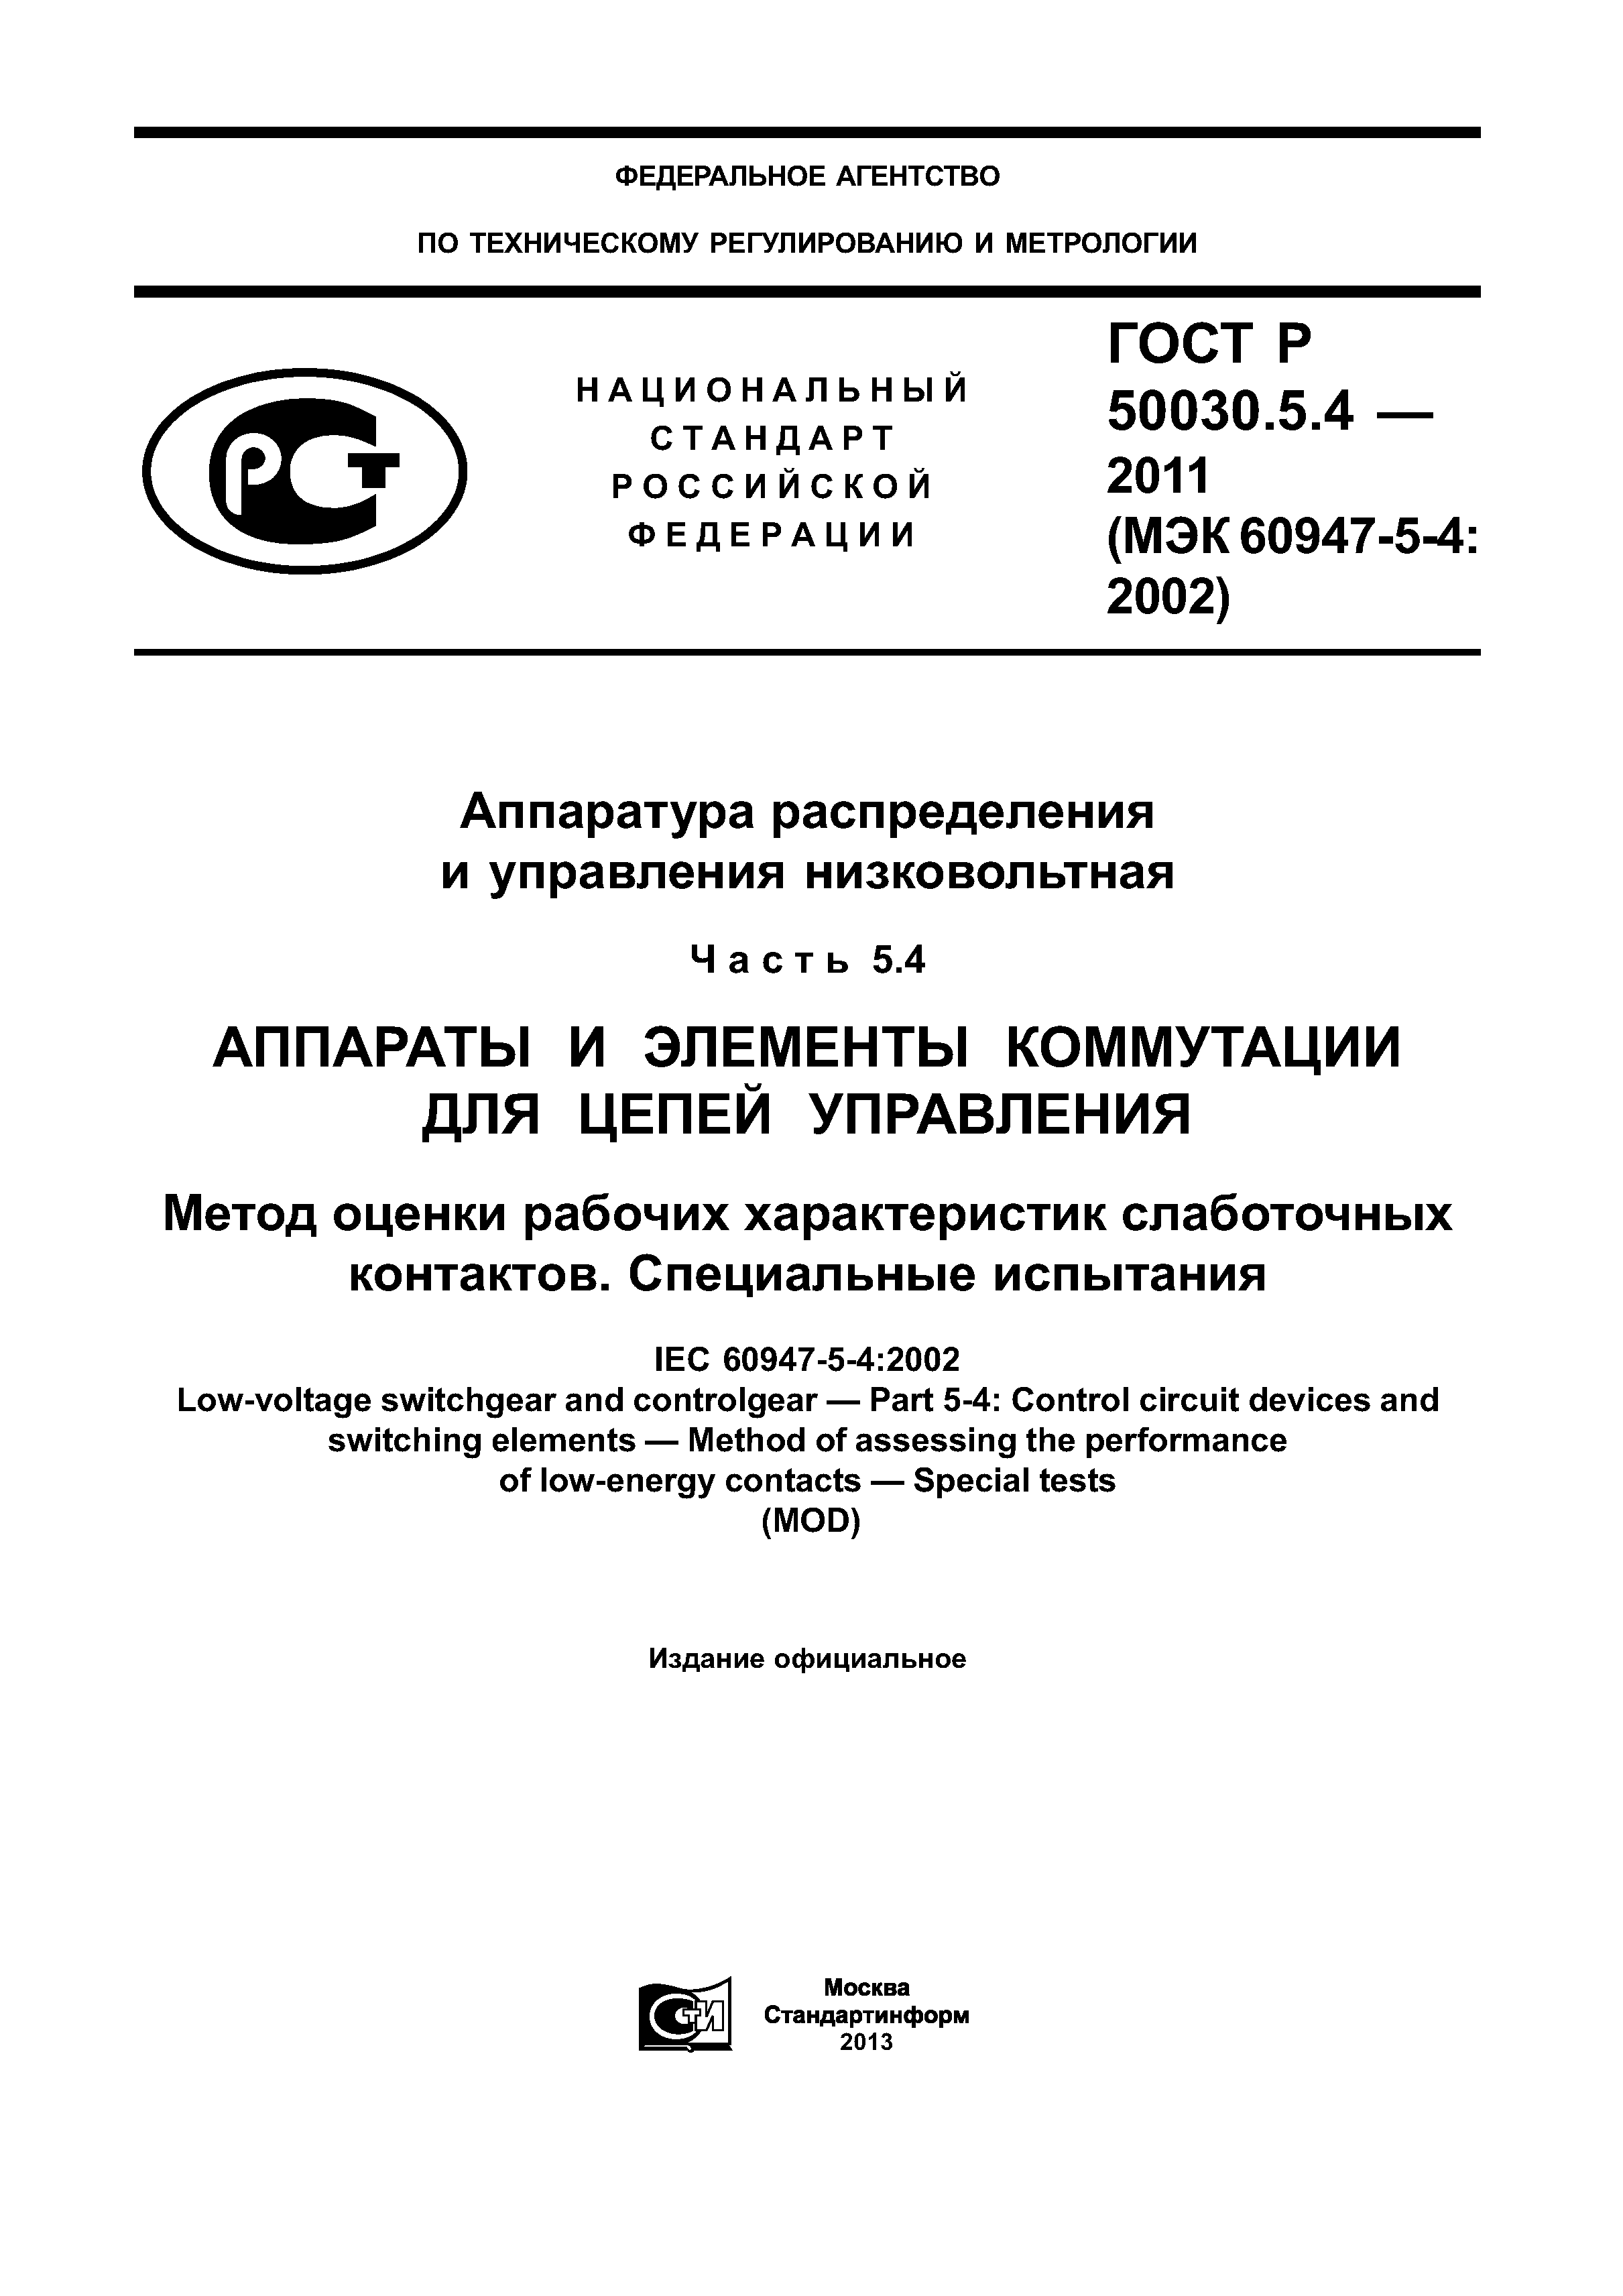 ГОСТ Р 50030.5.4-2011